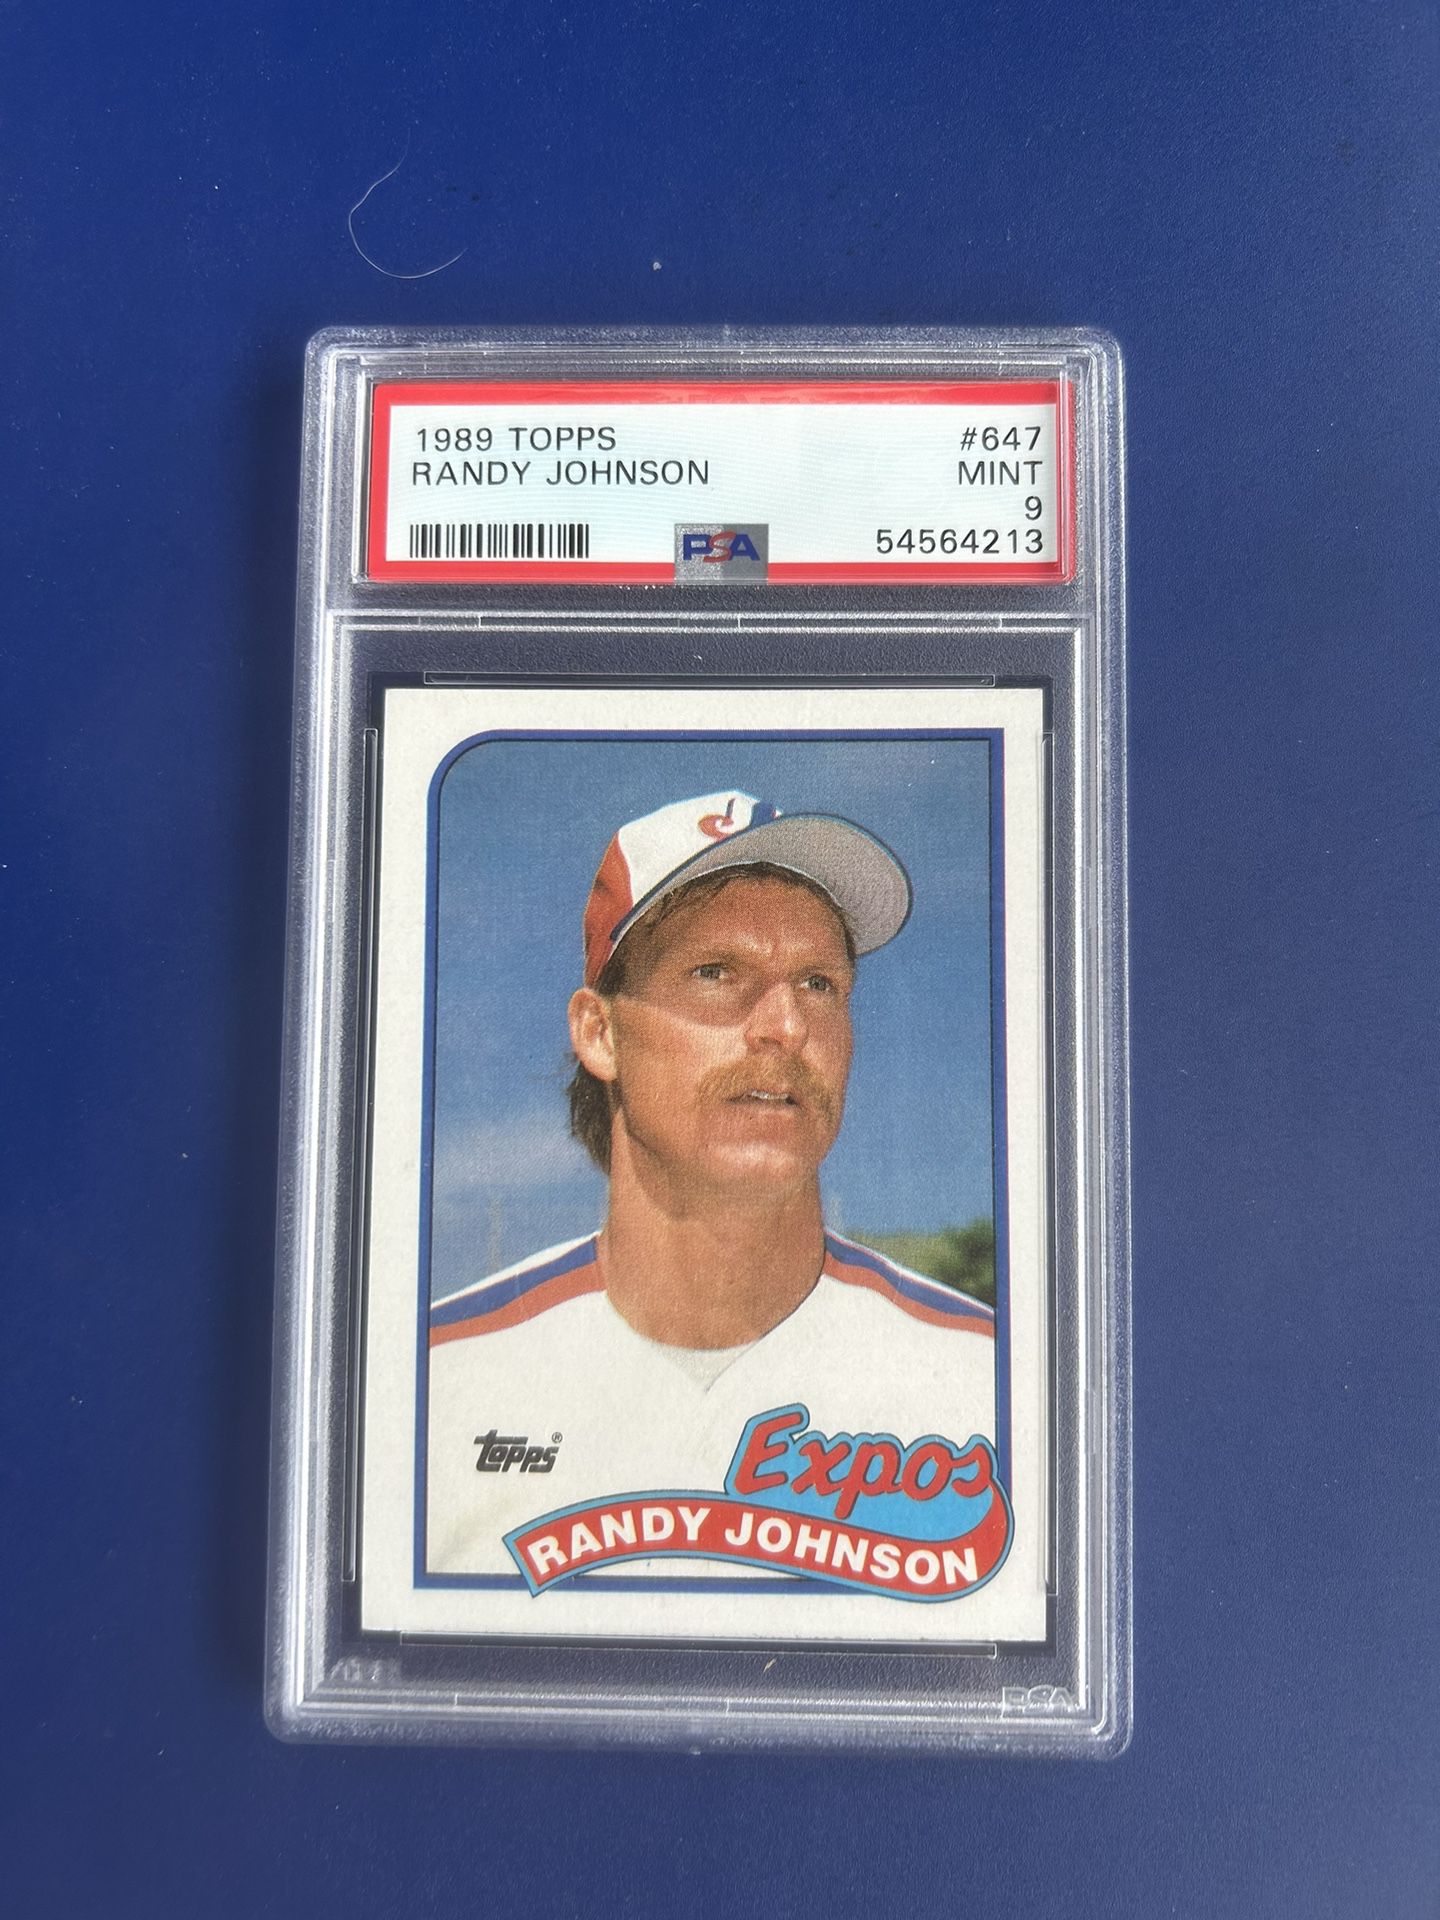 1989 Topps Randy Johnson Rookie Baseball Card Graded PSA 9